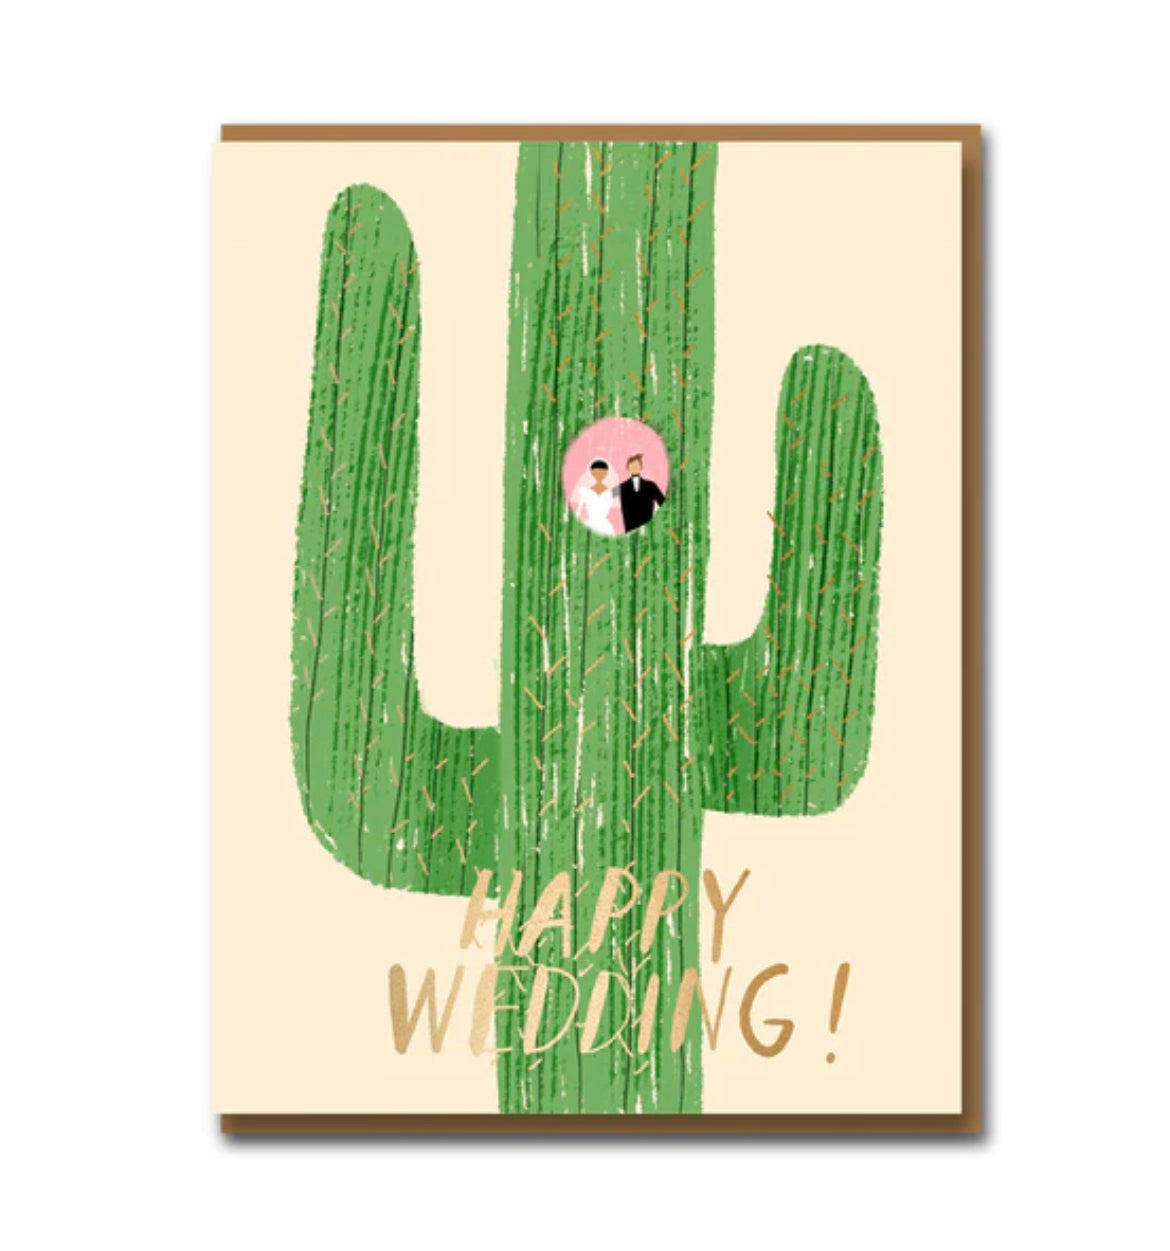 Saguaro Wedding Card